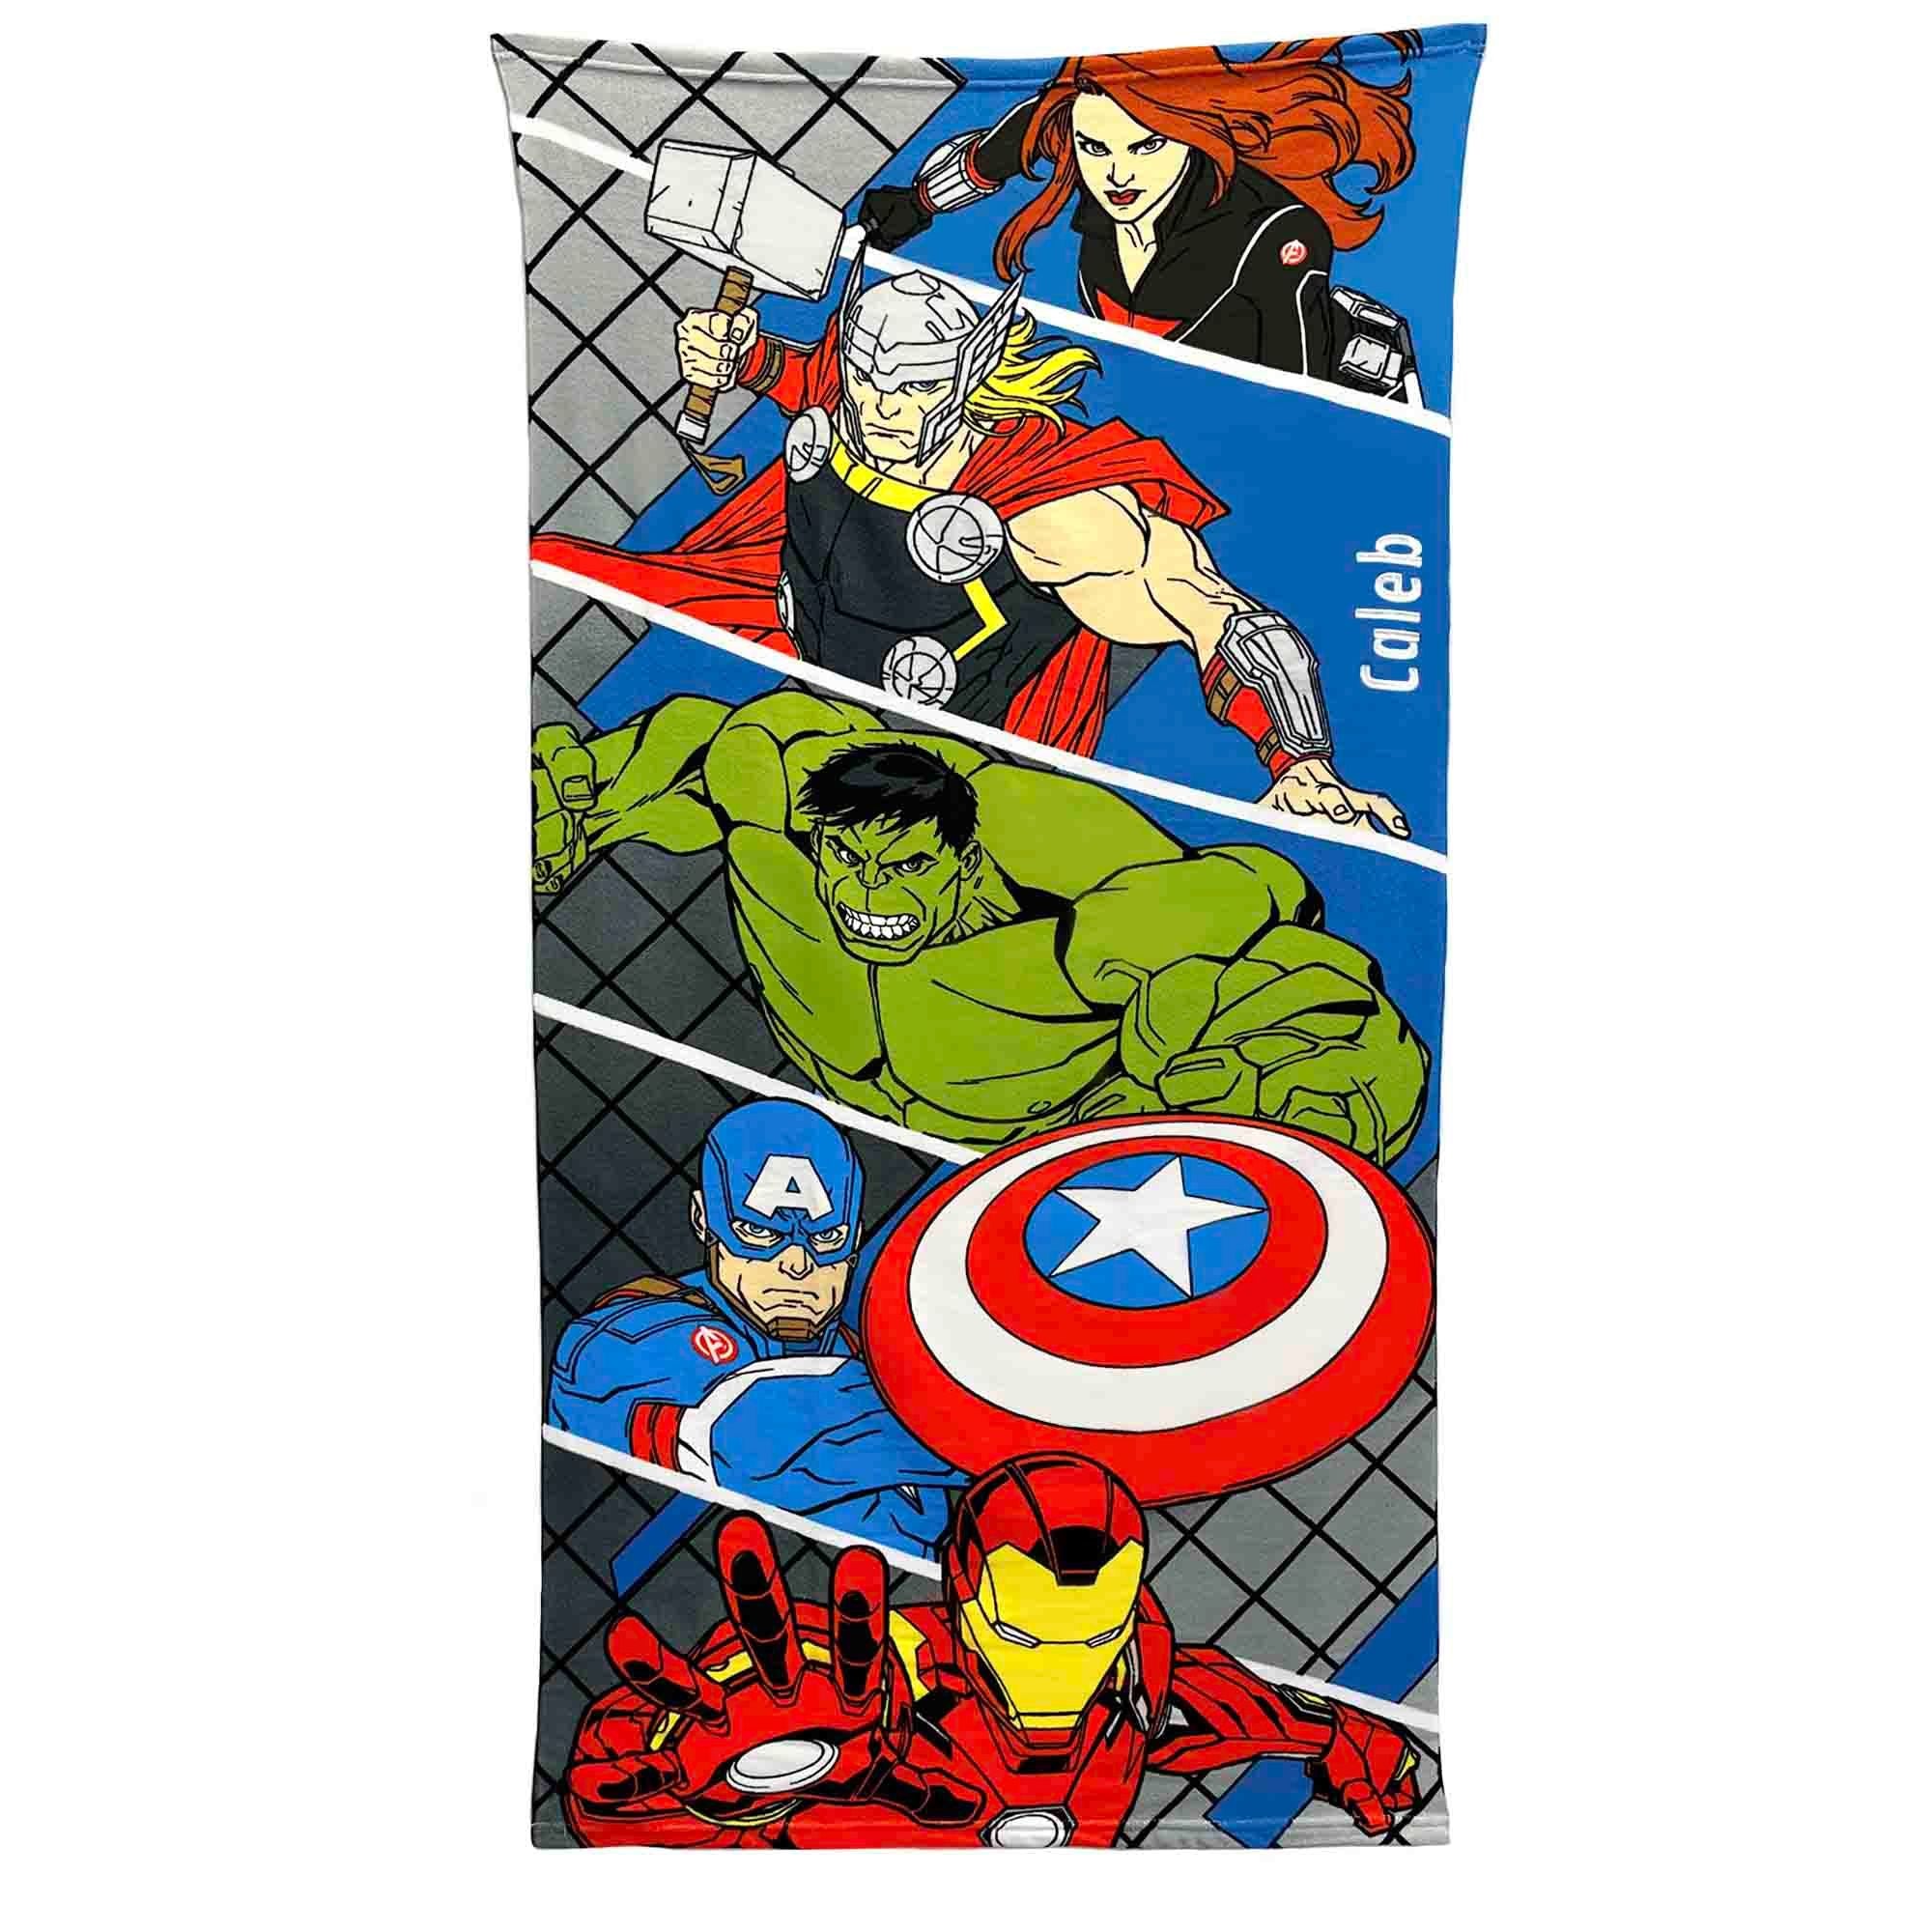 Personalized Licensed Disney Kid's Beach Towel (Marvel Avengers)